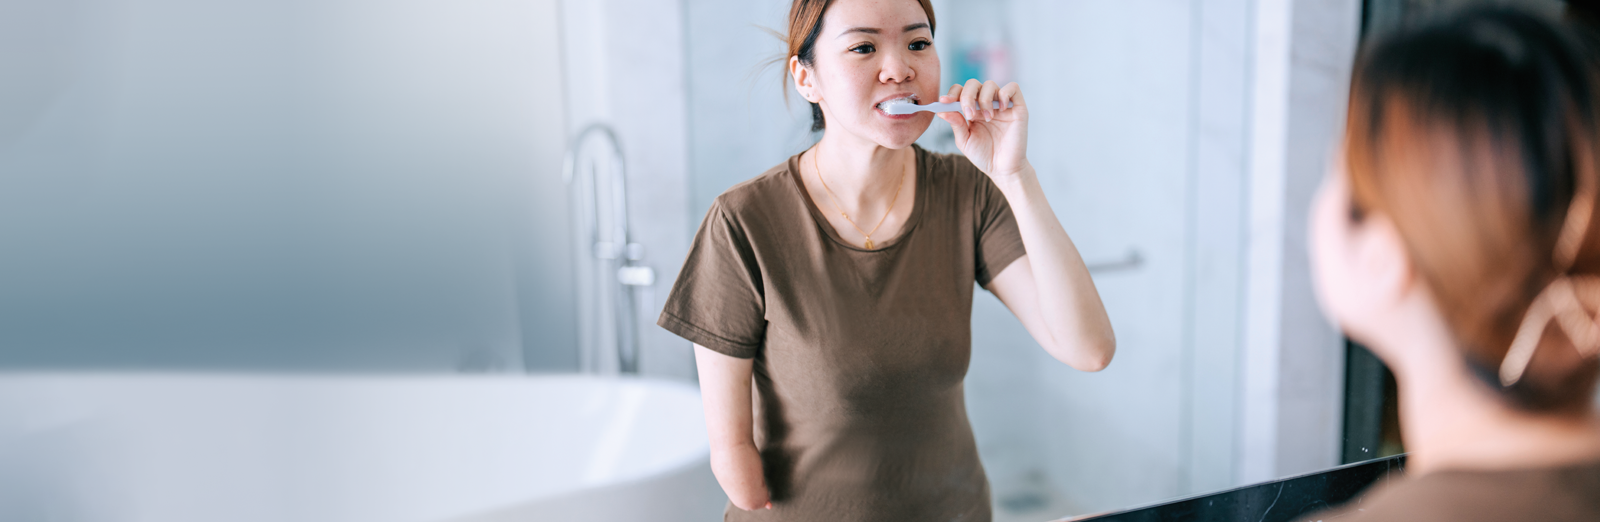 woman-brushing-teeth-in-mirror-1600x522.png